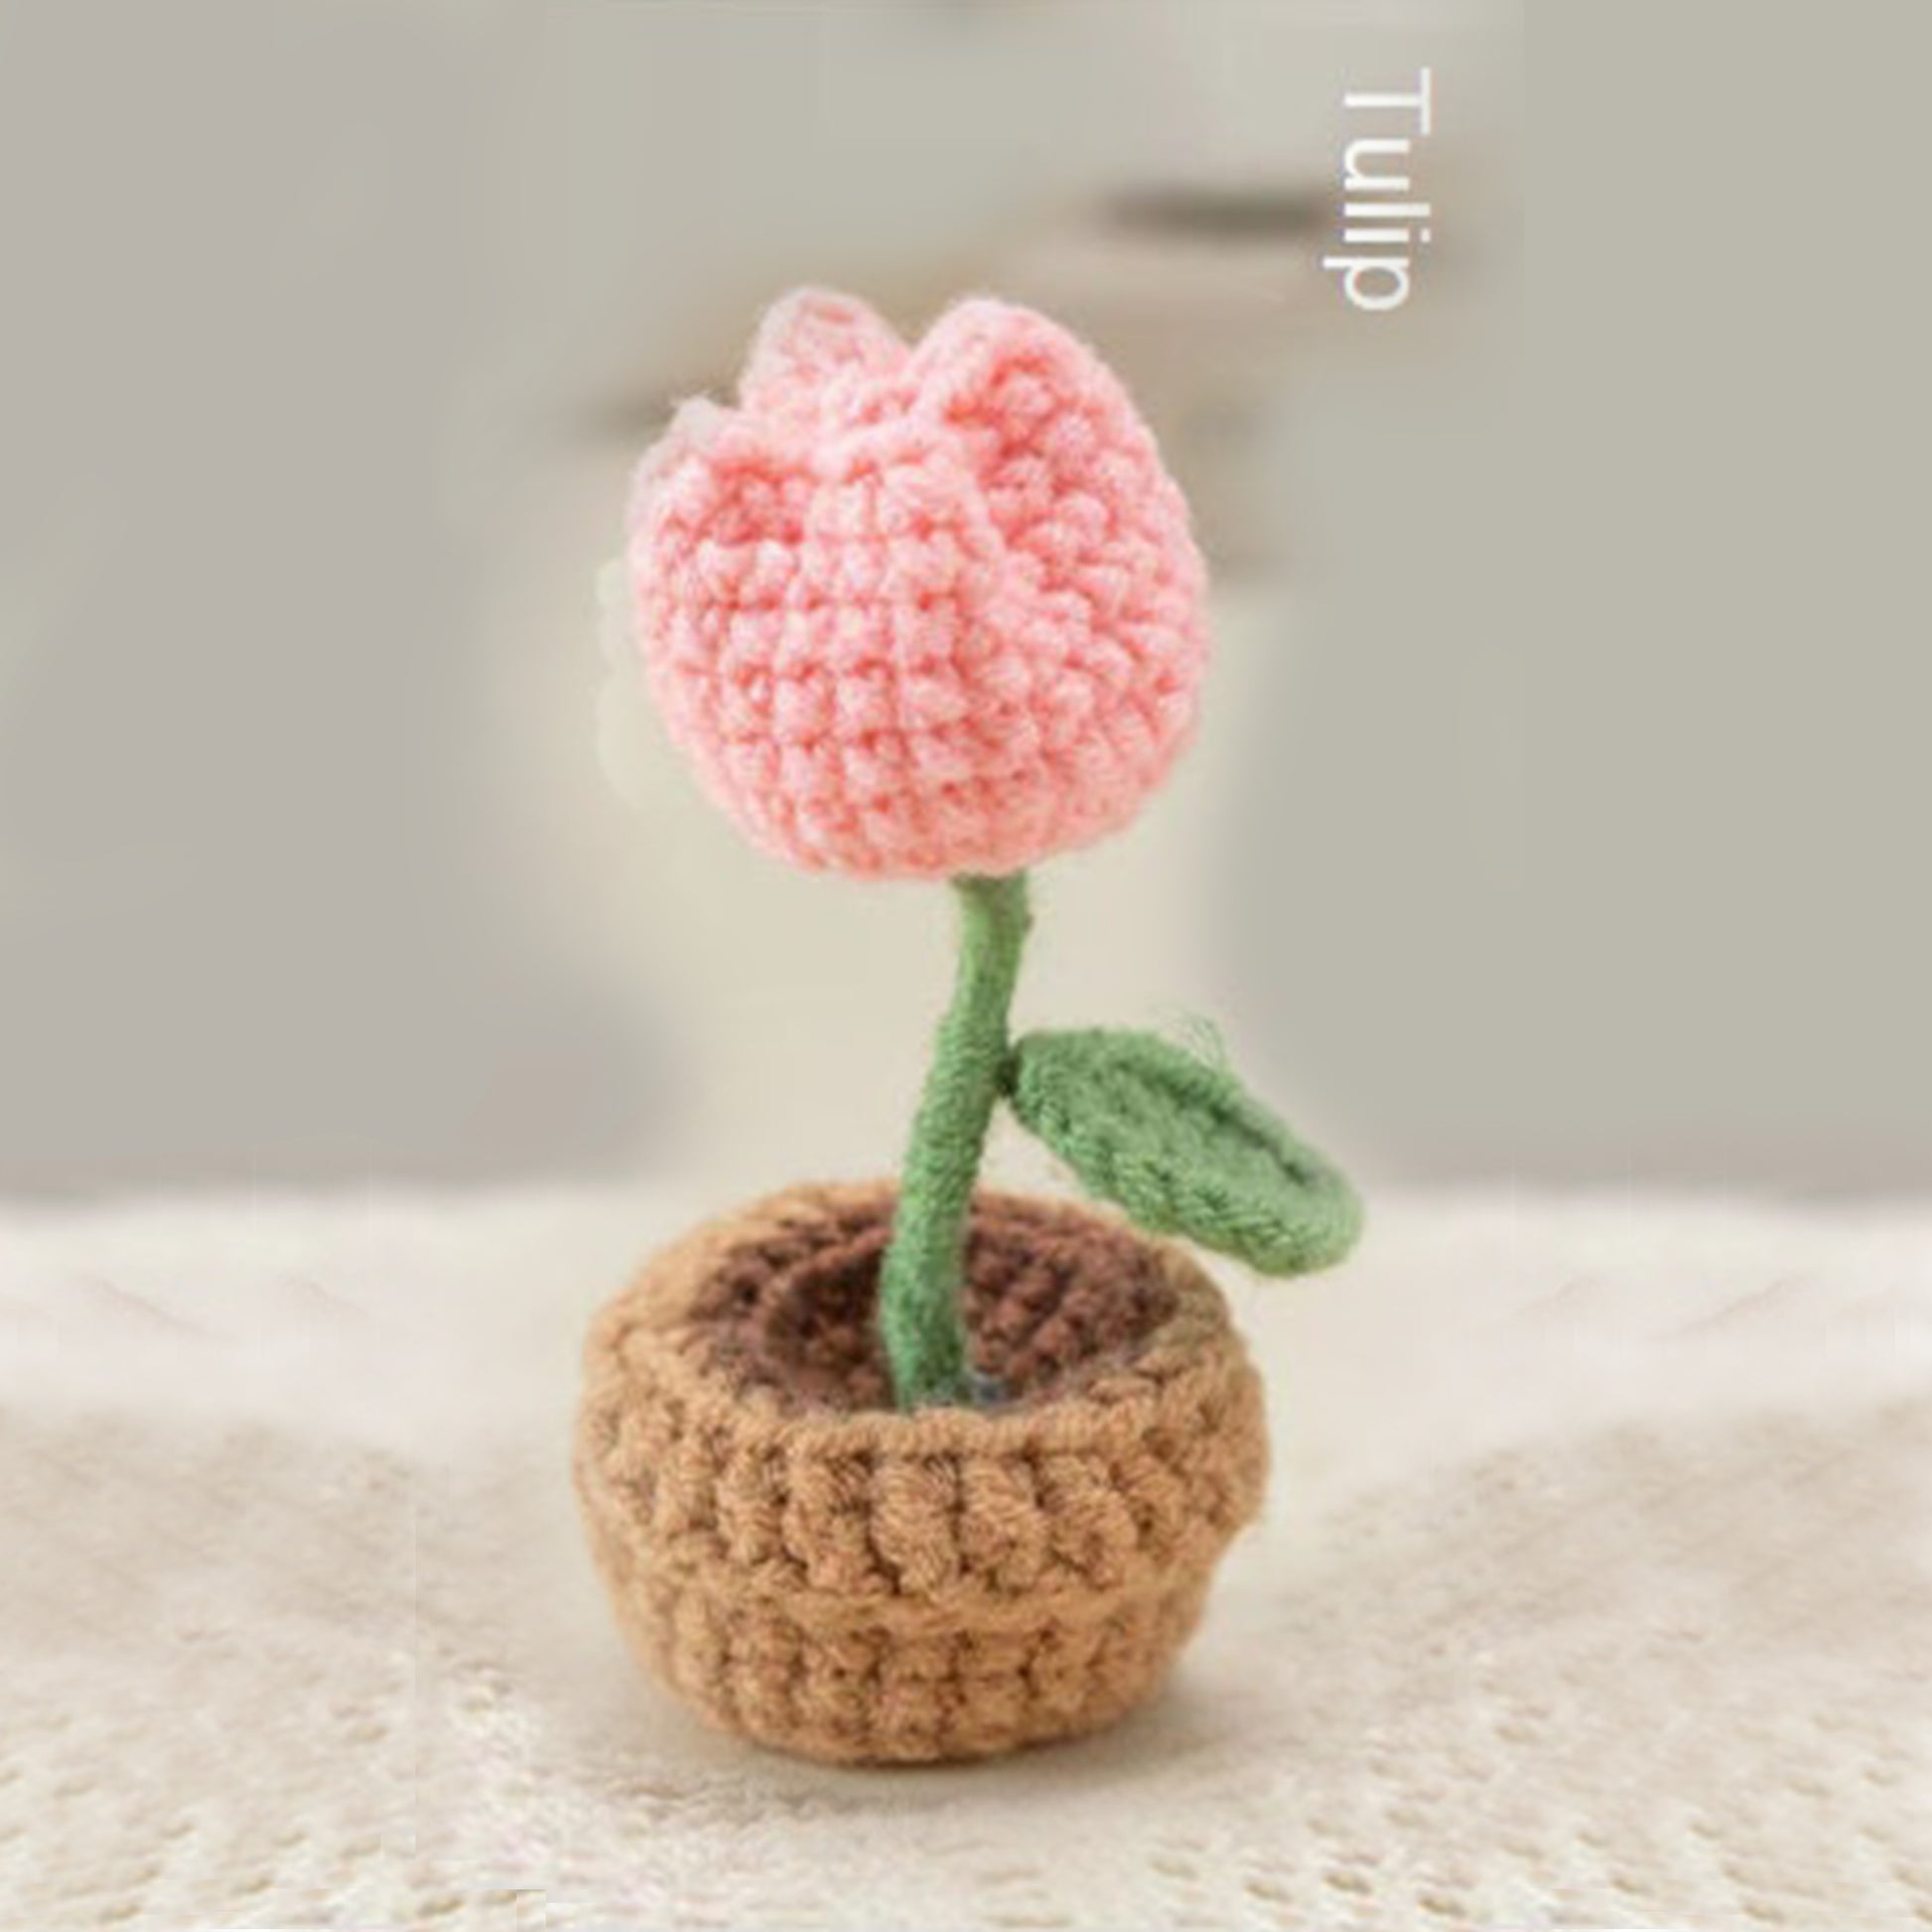 Mixed Flower Bouquet Crochet Kit With Yarn DIY Rose Tulip Daisy Sunflower  Knit·